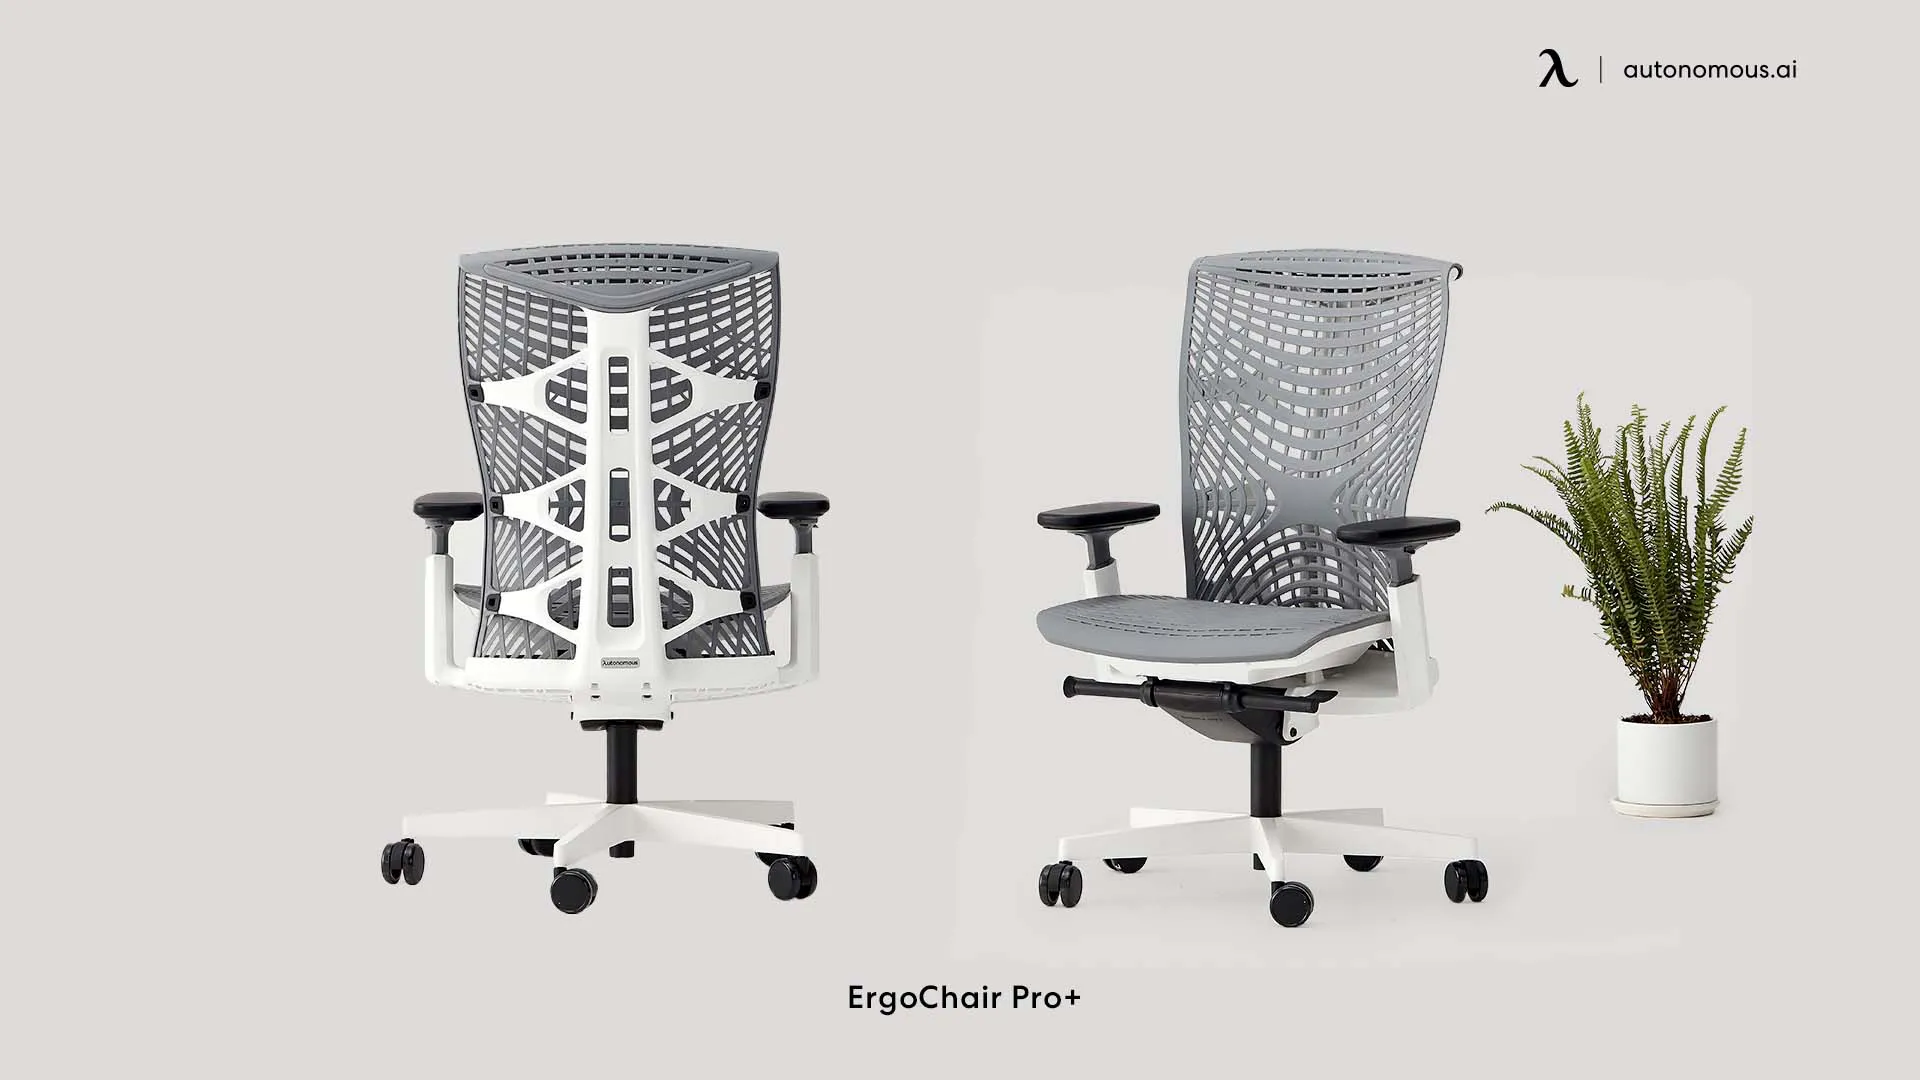 ErgoChair Plus big and tall chair